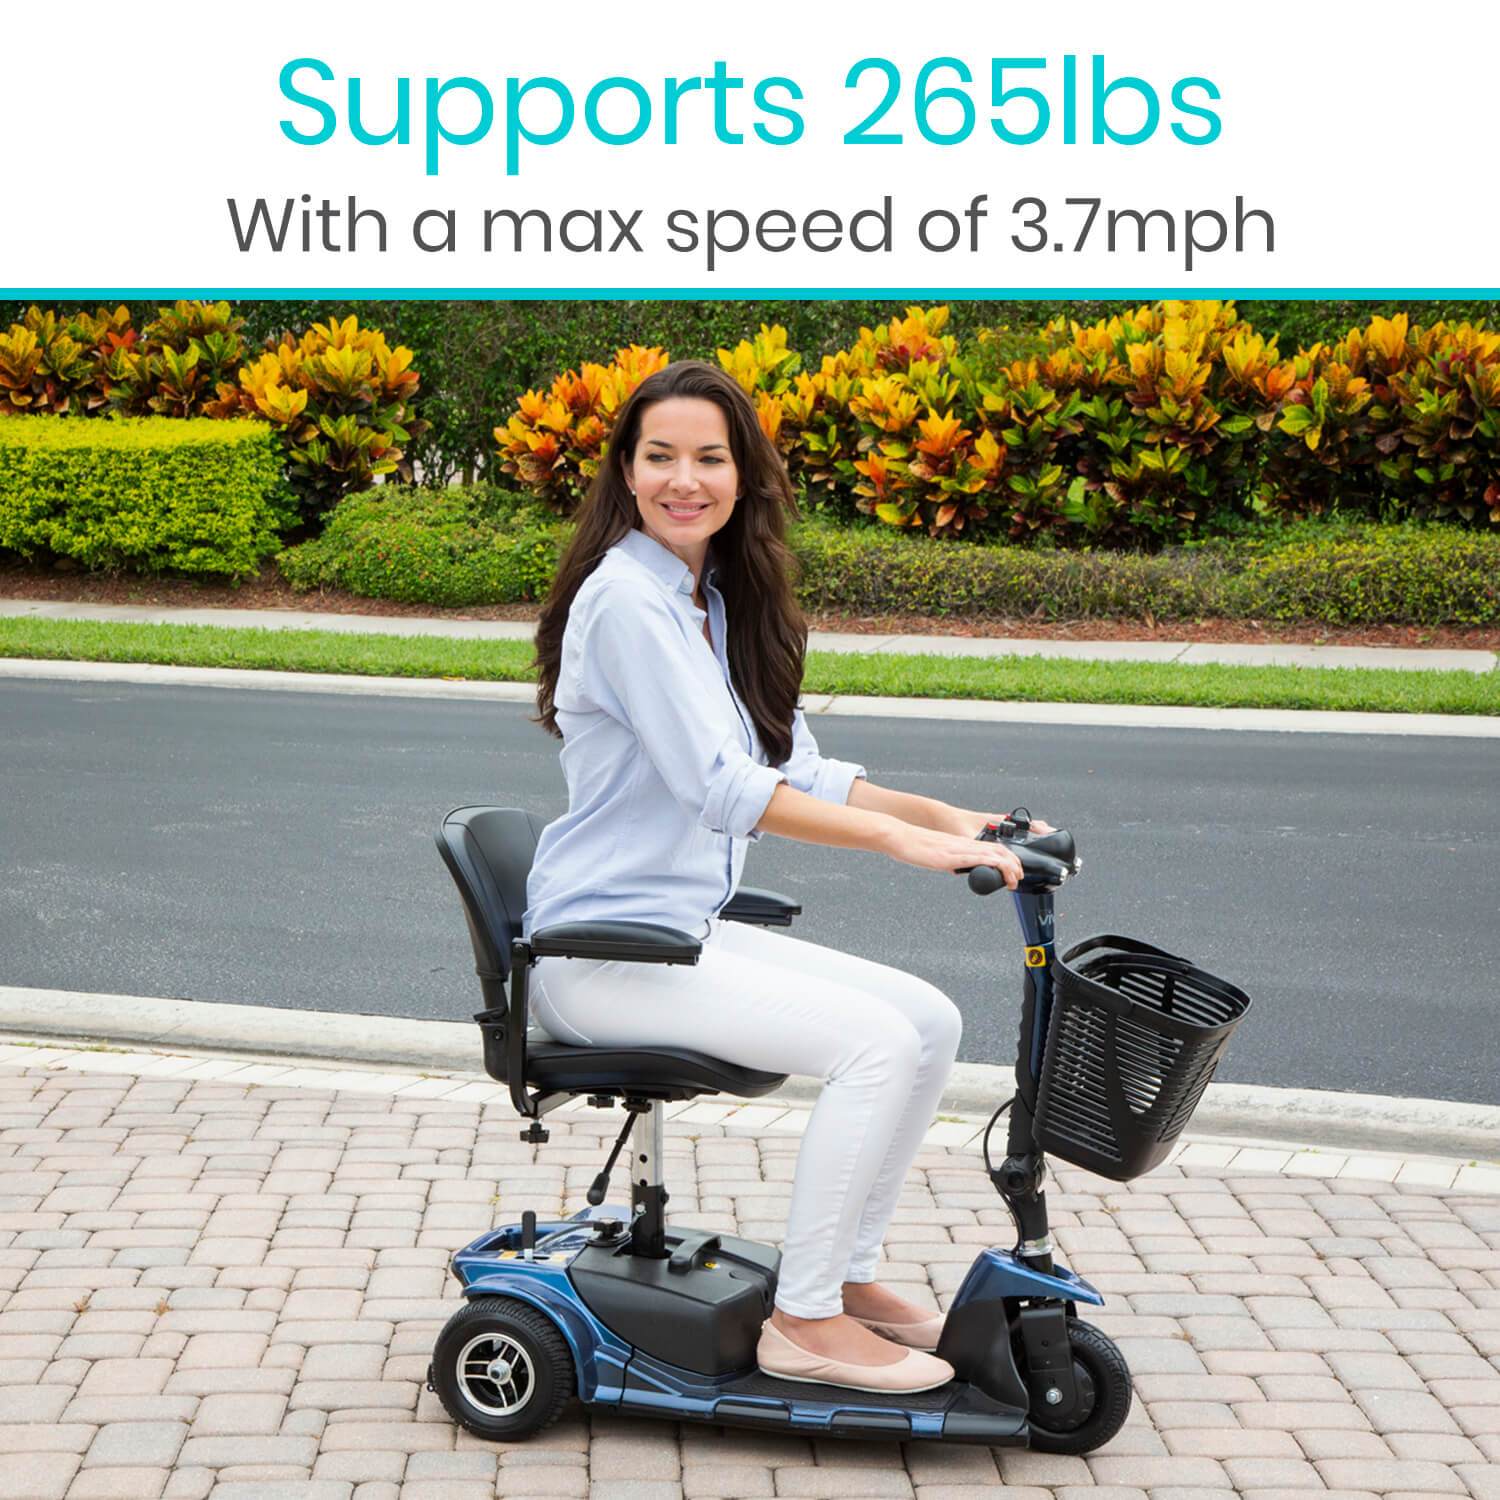 Vive Health 12V/12Ah 3-Wheel Mobility Scooter MOB1025